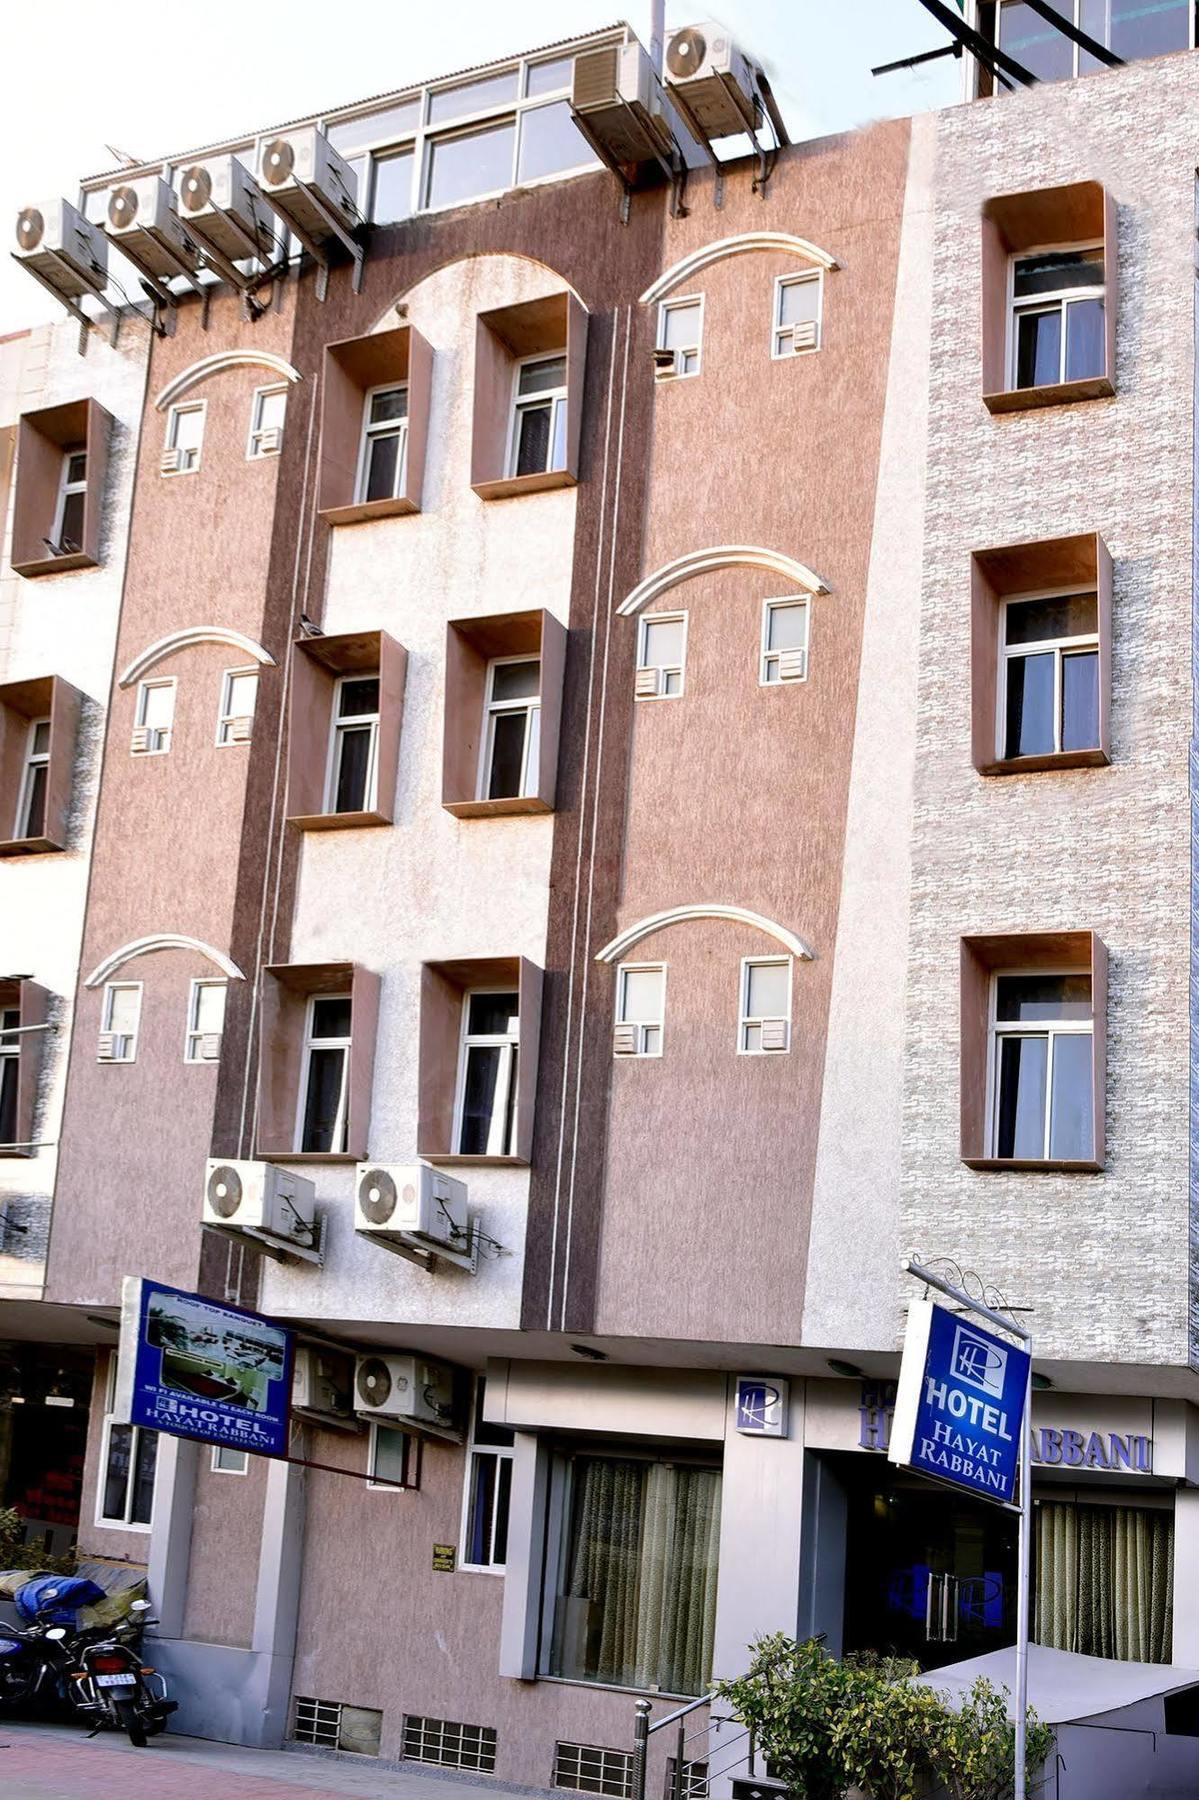 Hotel Hayat Rabbani Jaipur Exterior photo